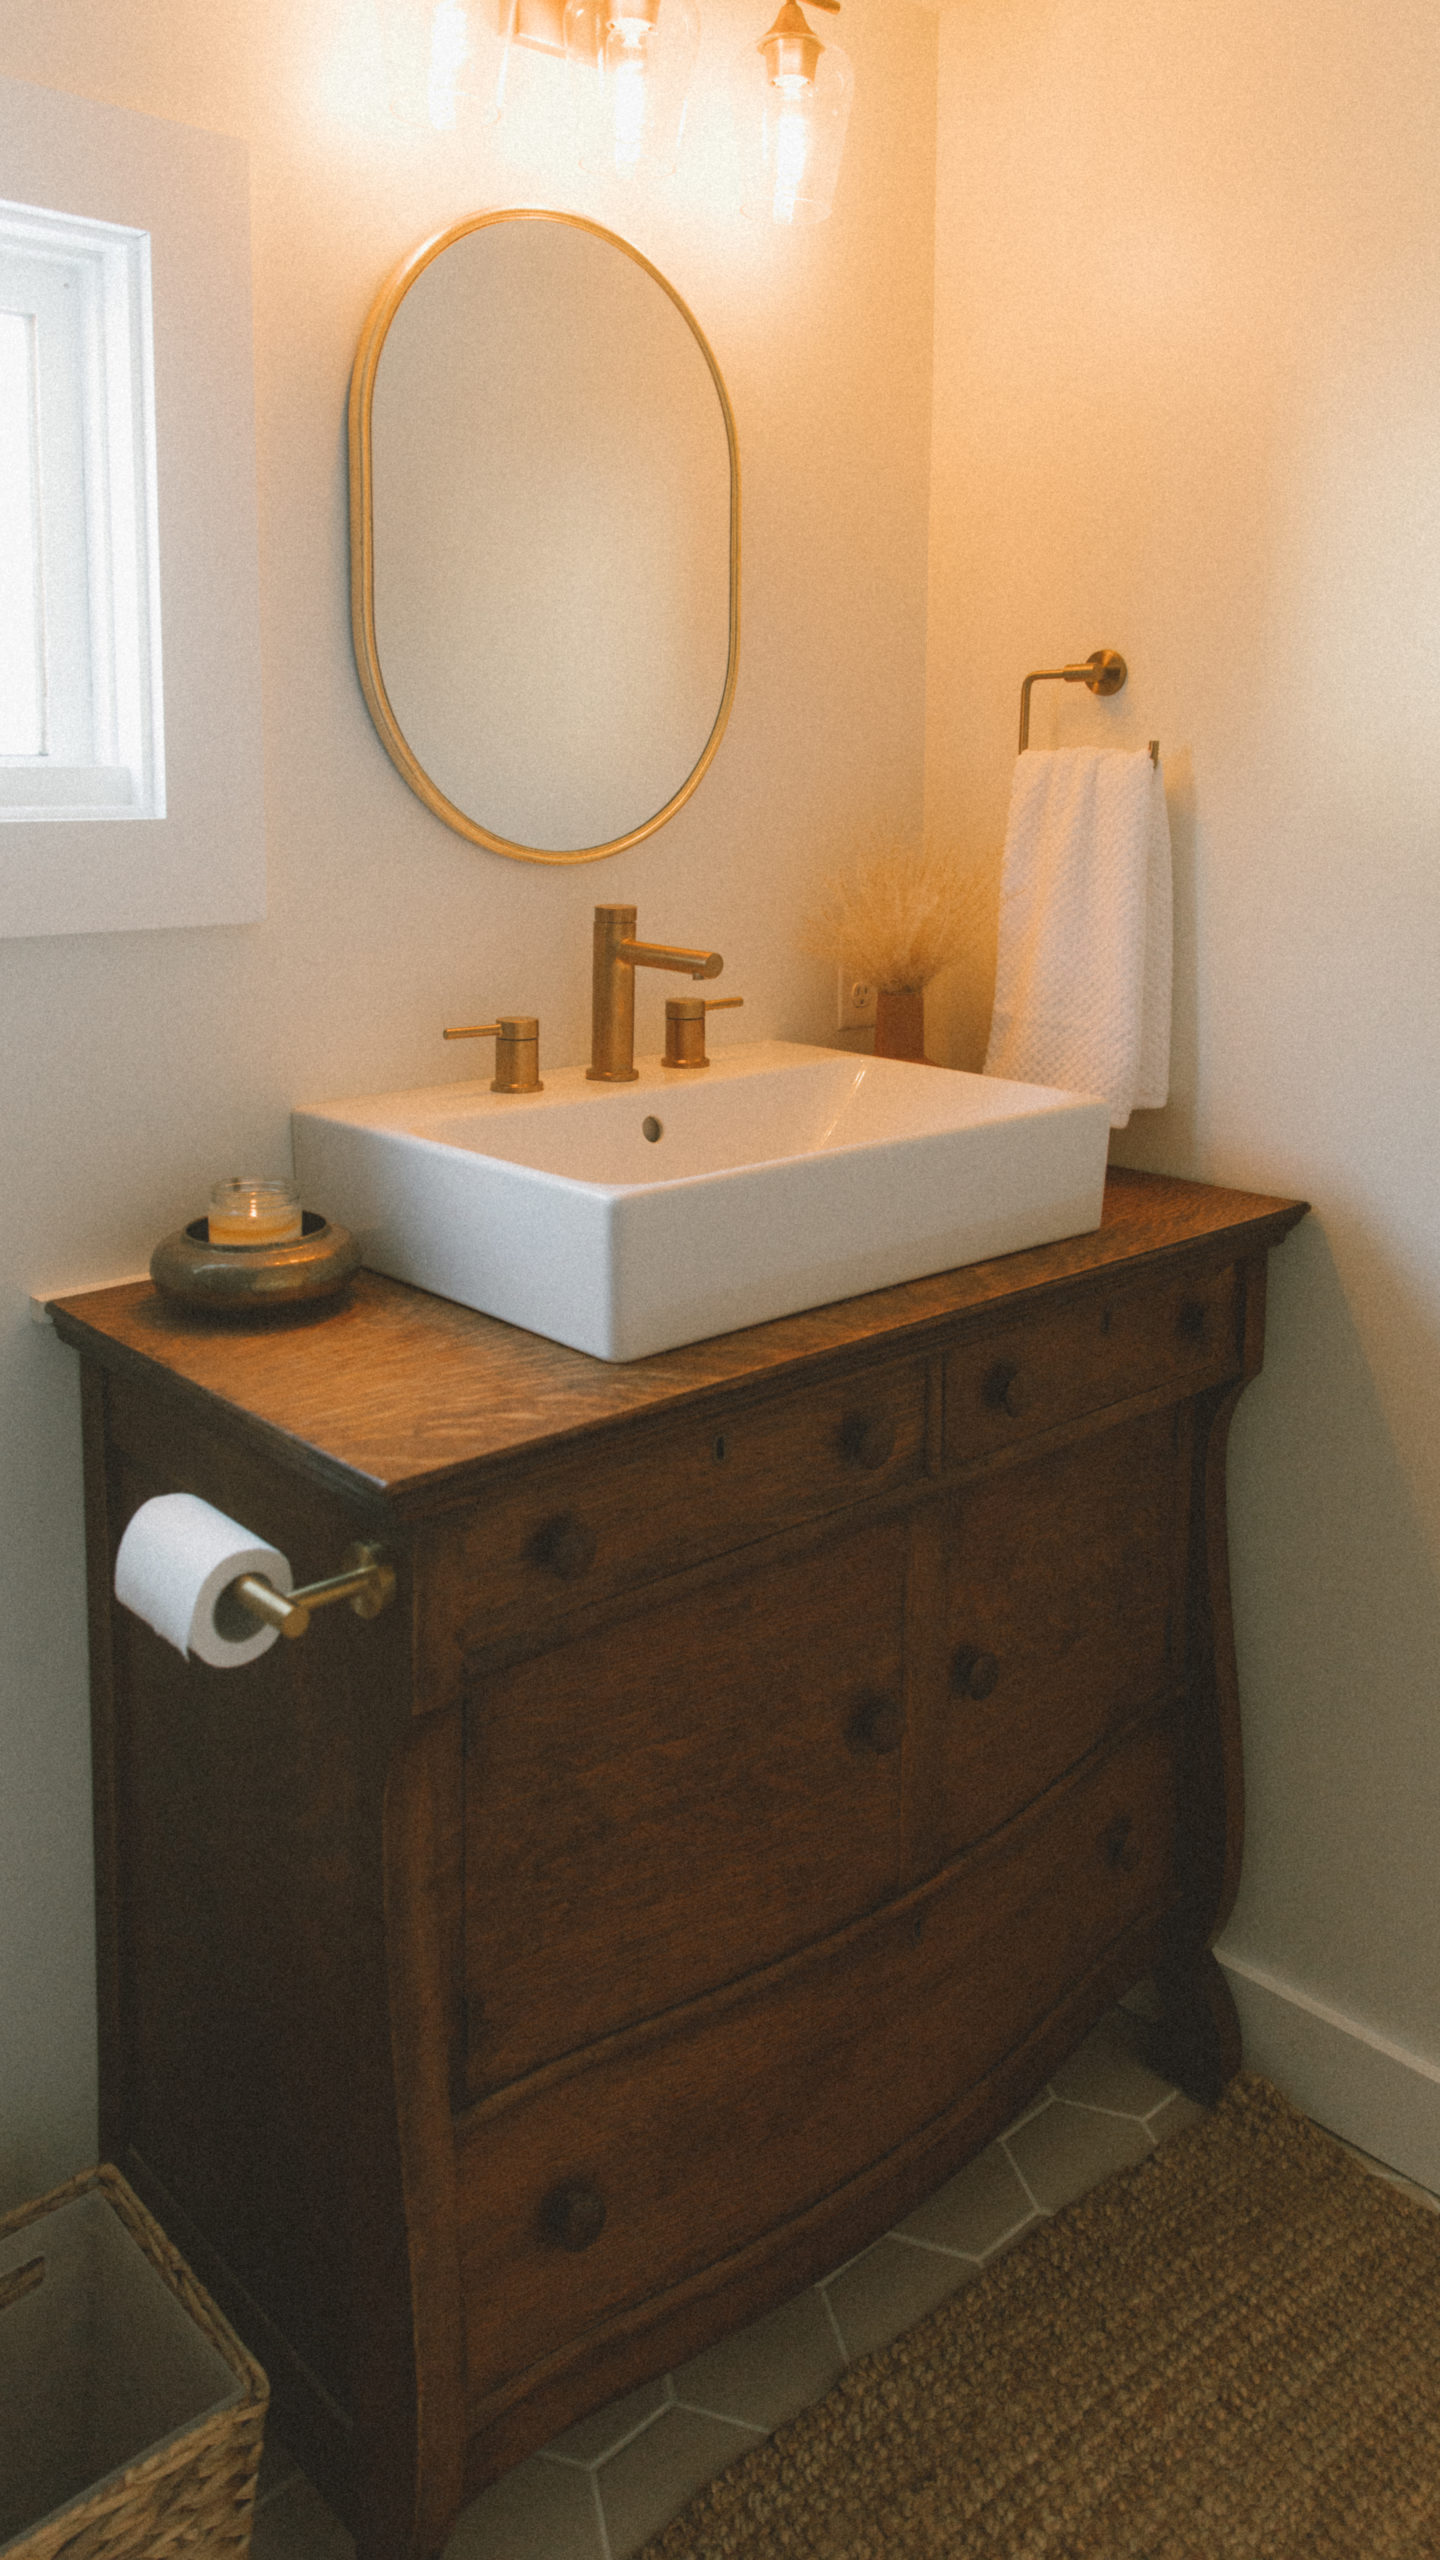 Vintage dresser turned bathroom vanity in a sustainable, earth-inspired bathroom renovation via elanaloo.com